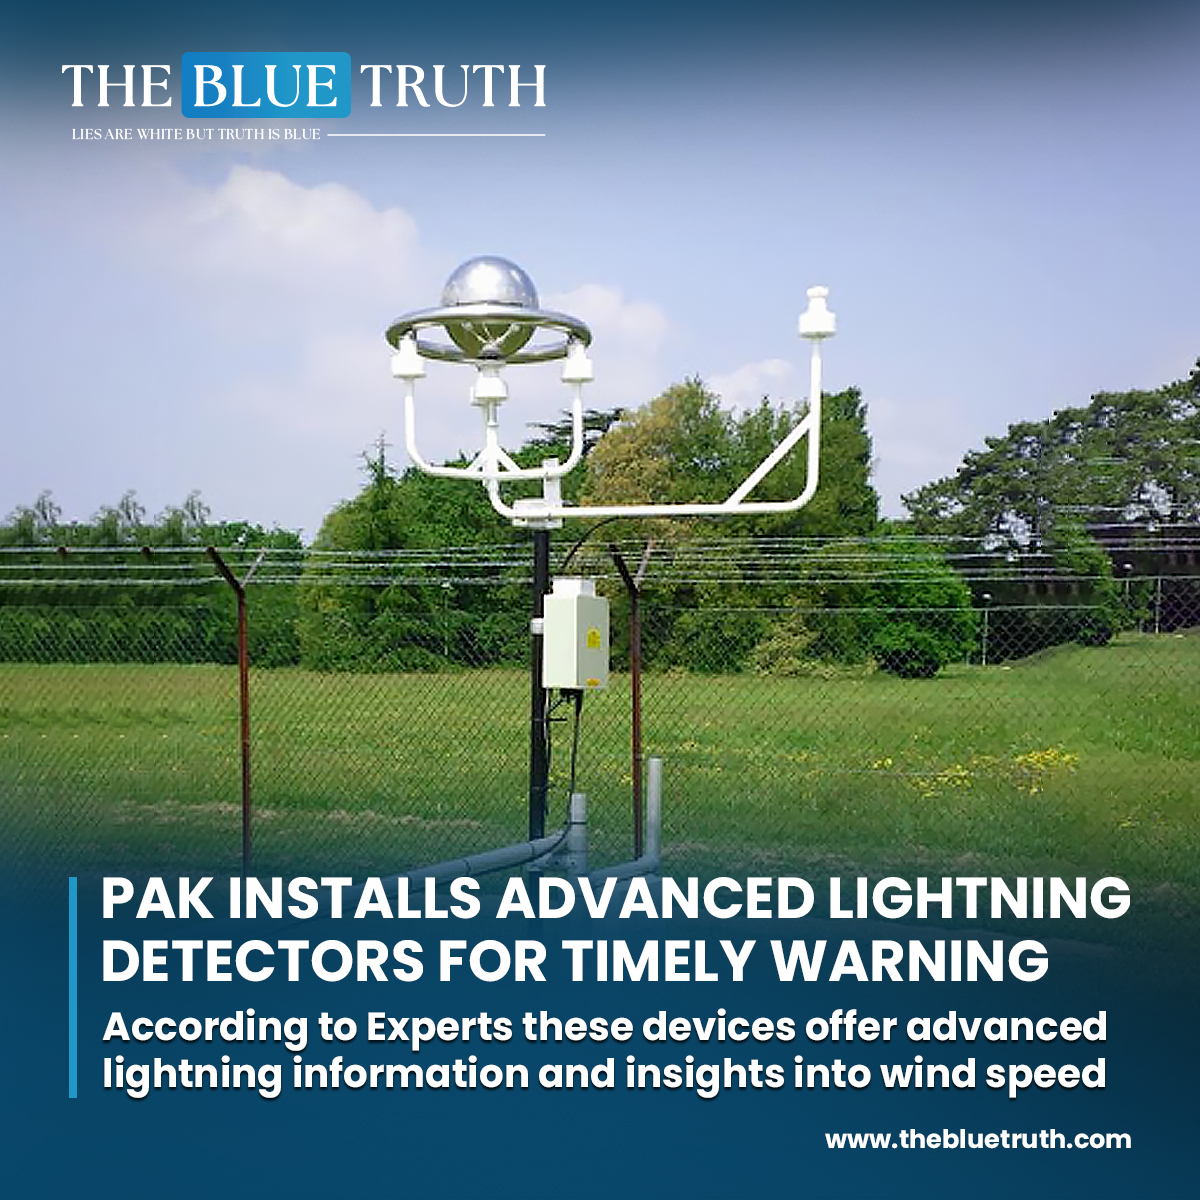 Pakistan has initiated the installation of cutting-edge equipment across various regions.
#LightningDetectors #AdvancedTechnology #WeatherWarning
#SafetyMeasures #PakistanTechnology #DisasterPrevention #EmergencyResponse
#WeatherMonitoring #tbt #TheBlueTruth